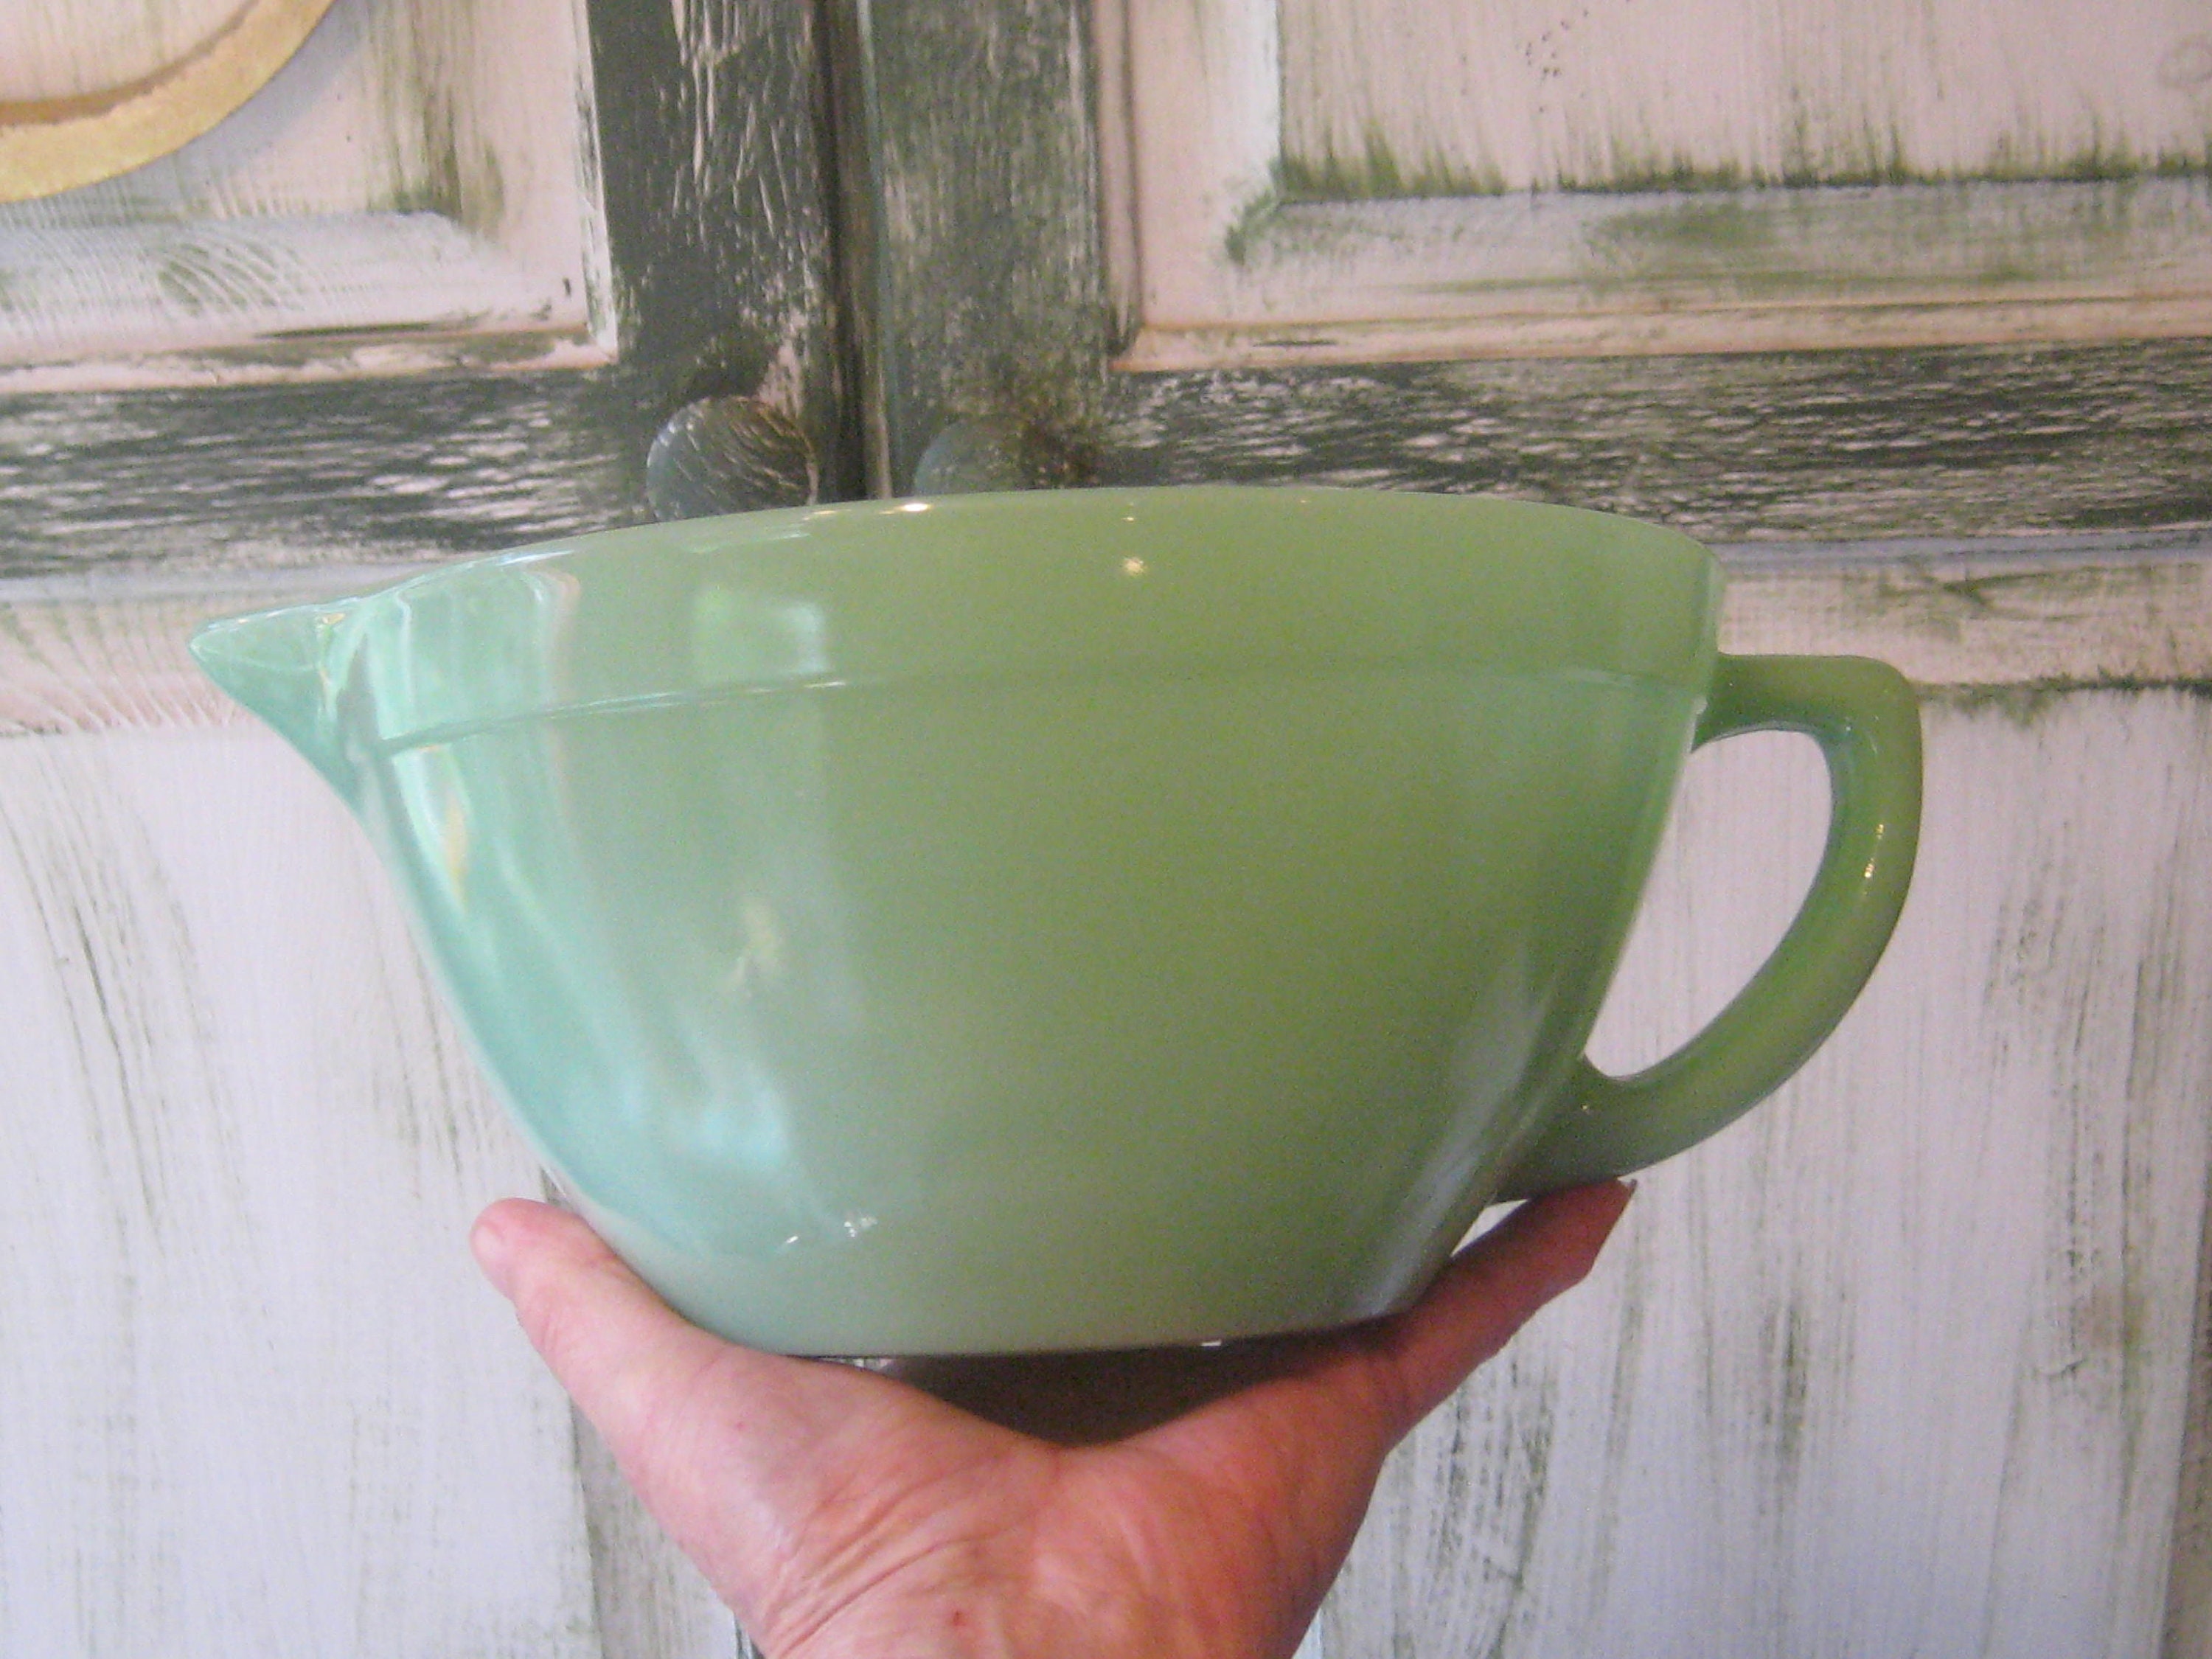 Vintage Jadeite Bowl - 1950's Green Milk Glass Fire King Oven Ware